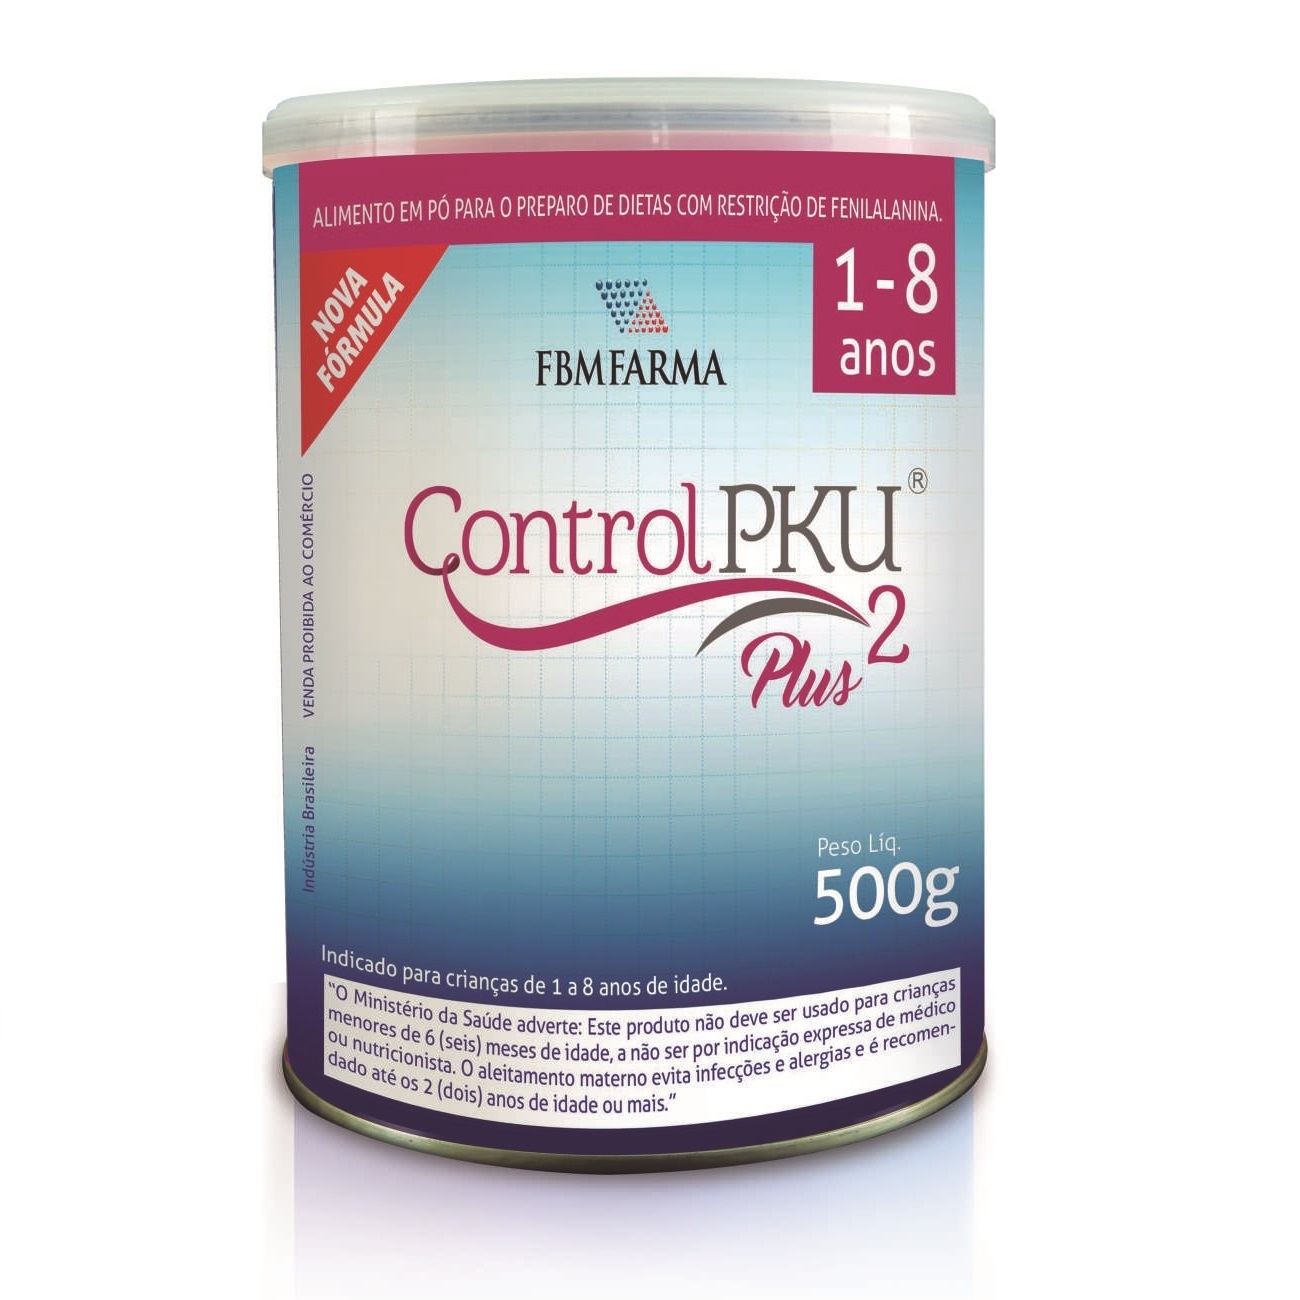 Control PKU 2 Plus